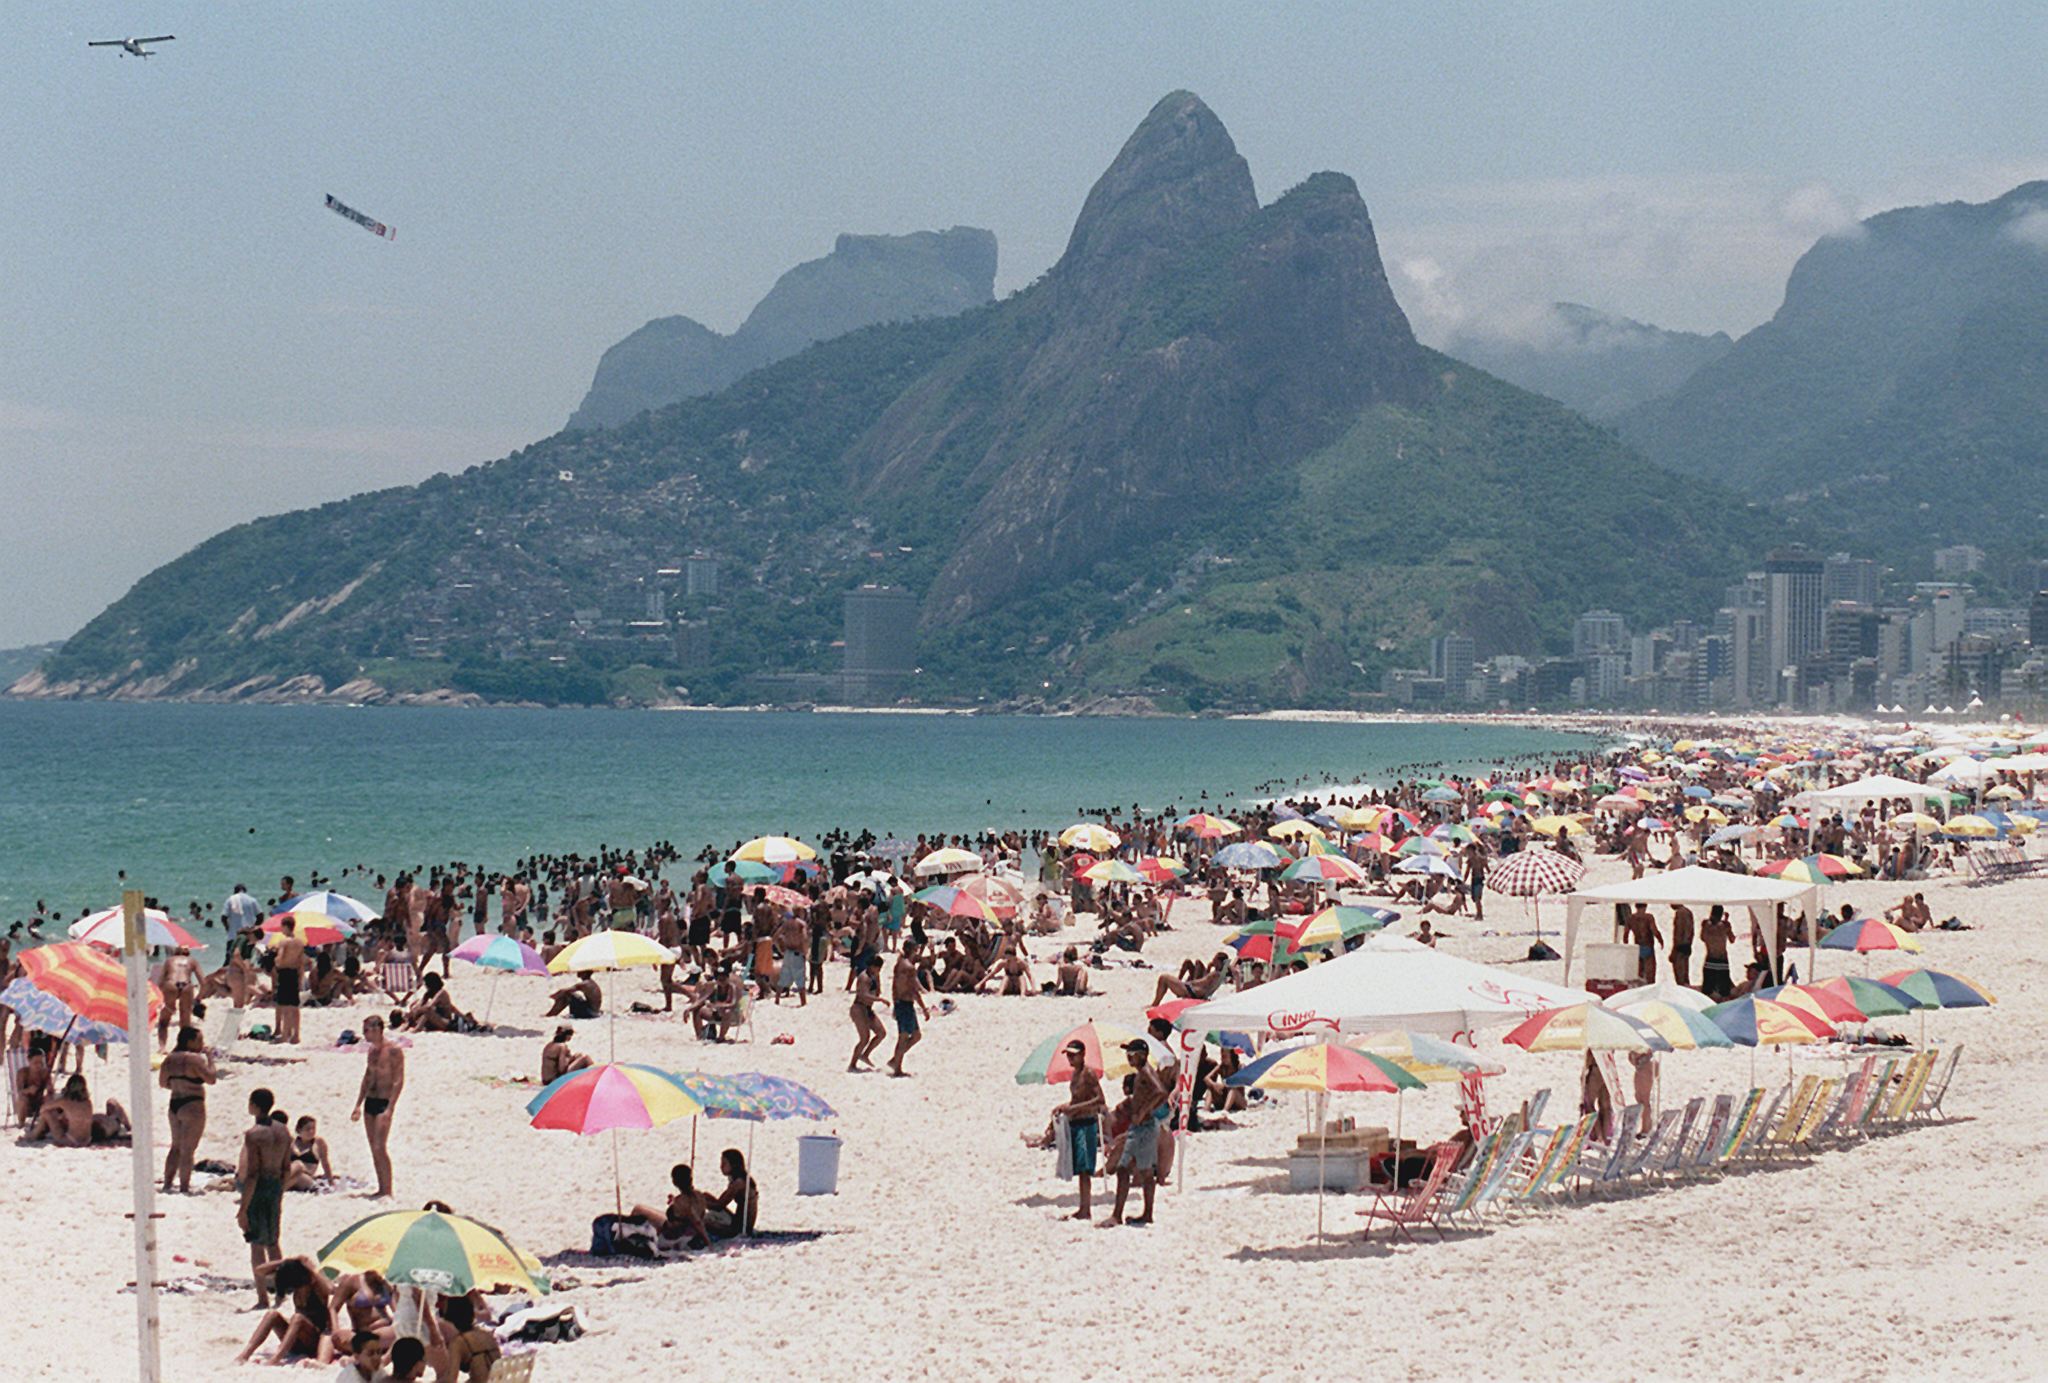 Rio de Janeiro's Ipanema Beach